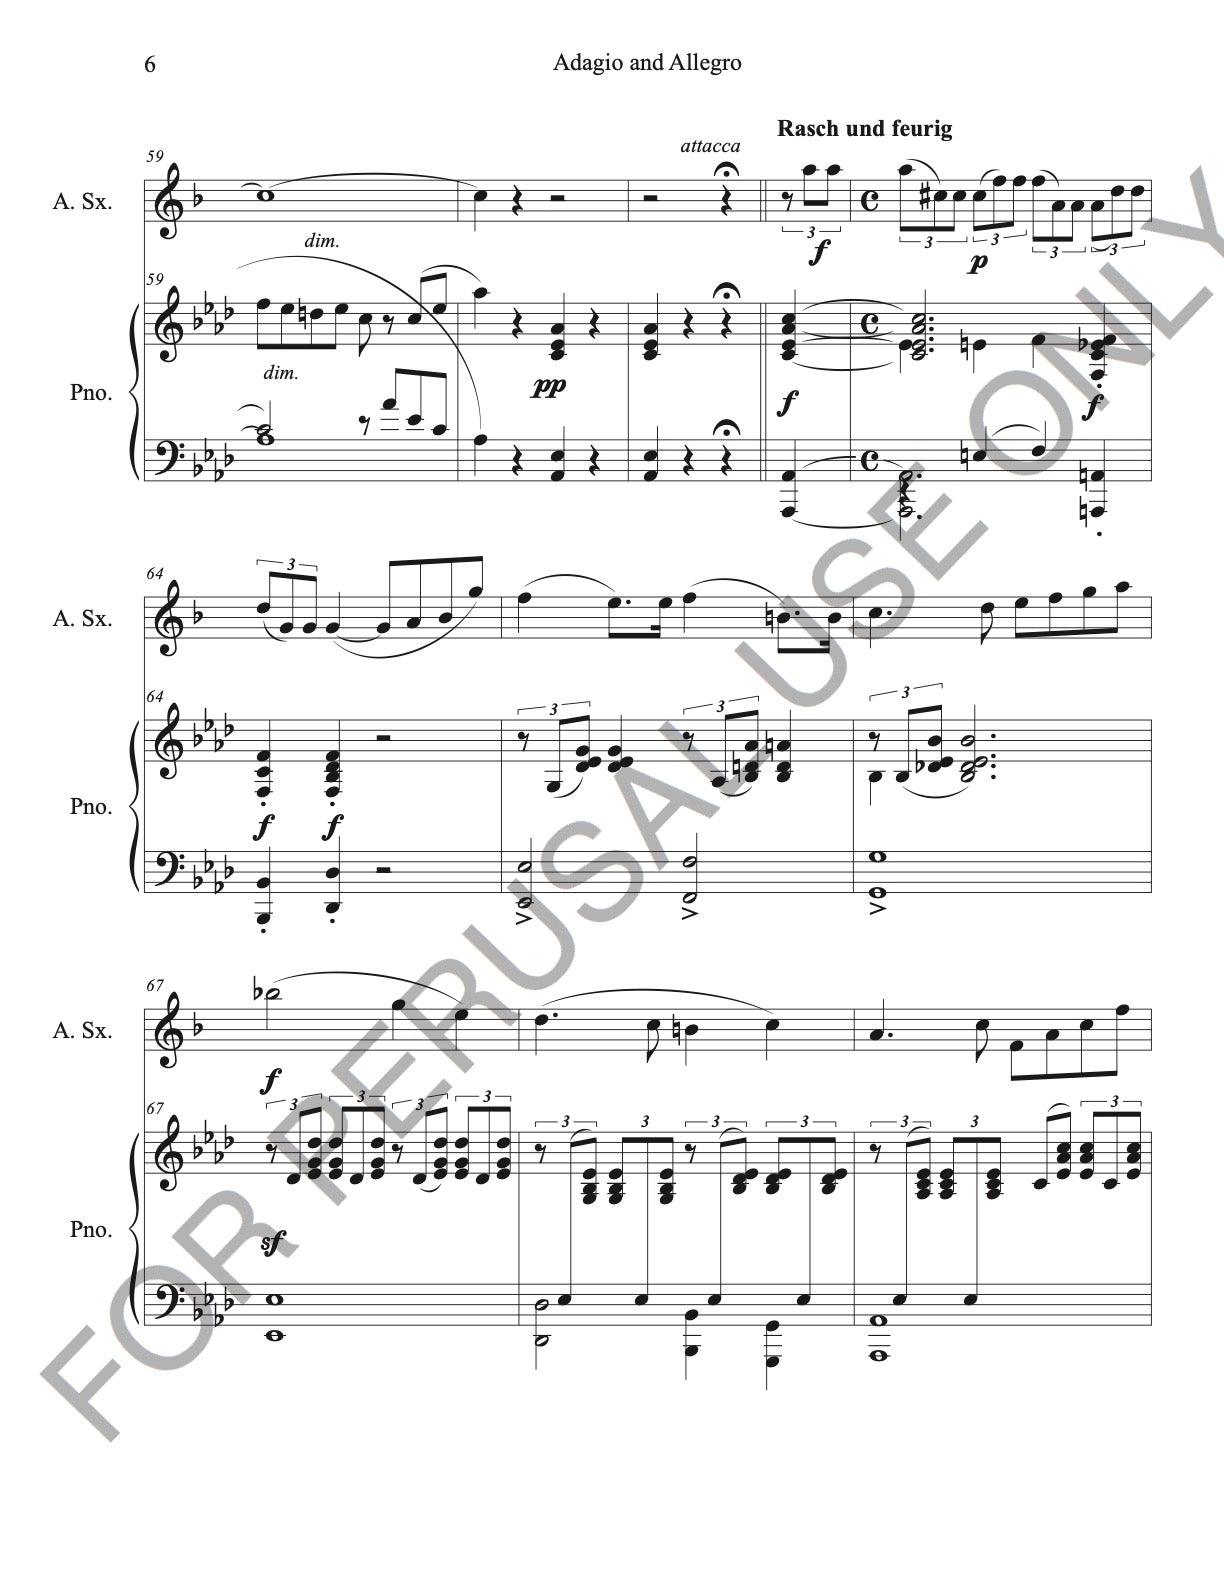 Alto Sax and Piano: Schumann's Adagio and Allegro Op. 70 - ChaipruckMekara